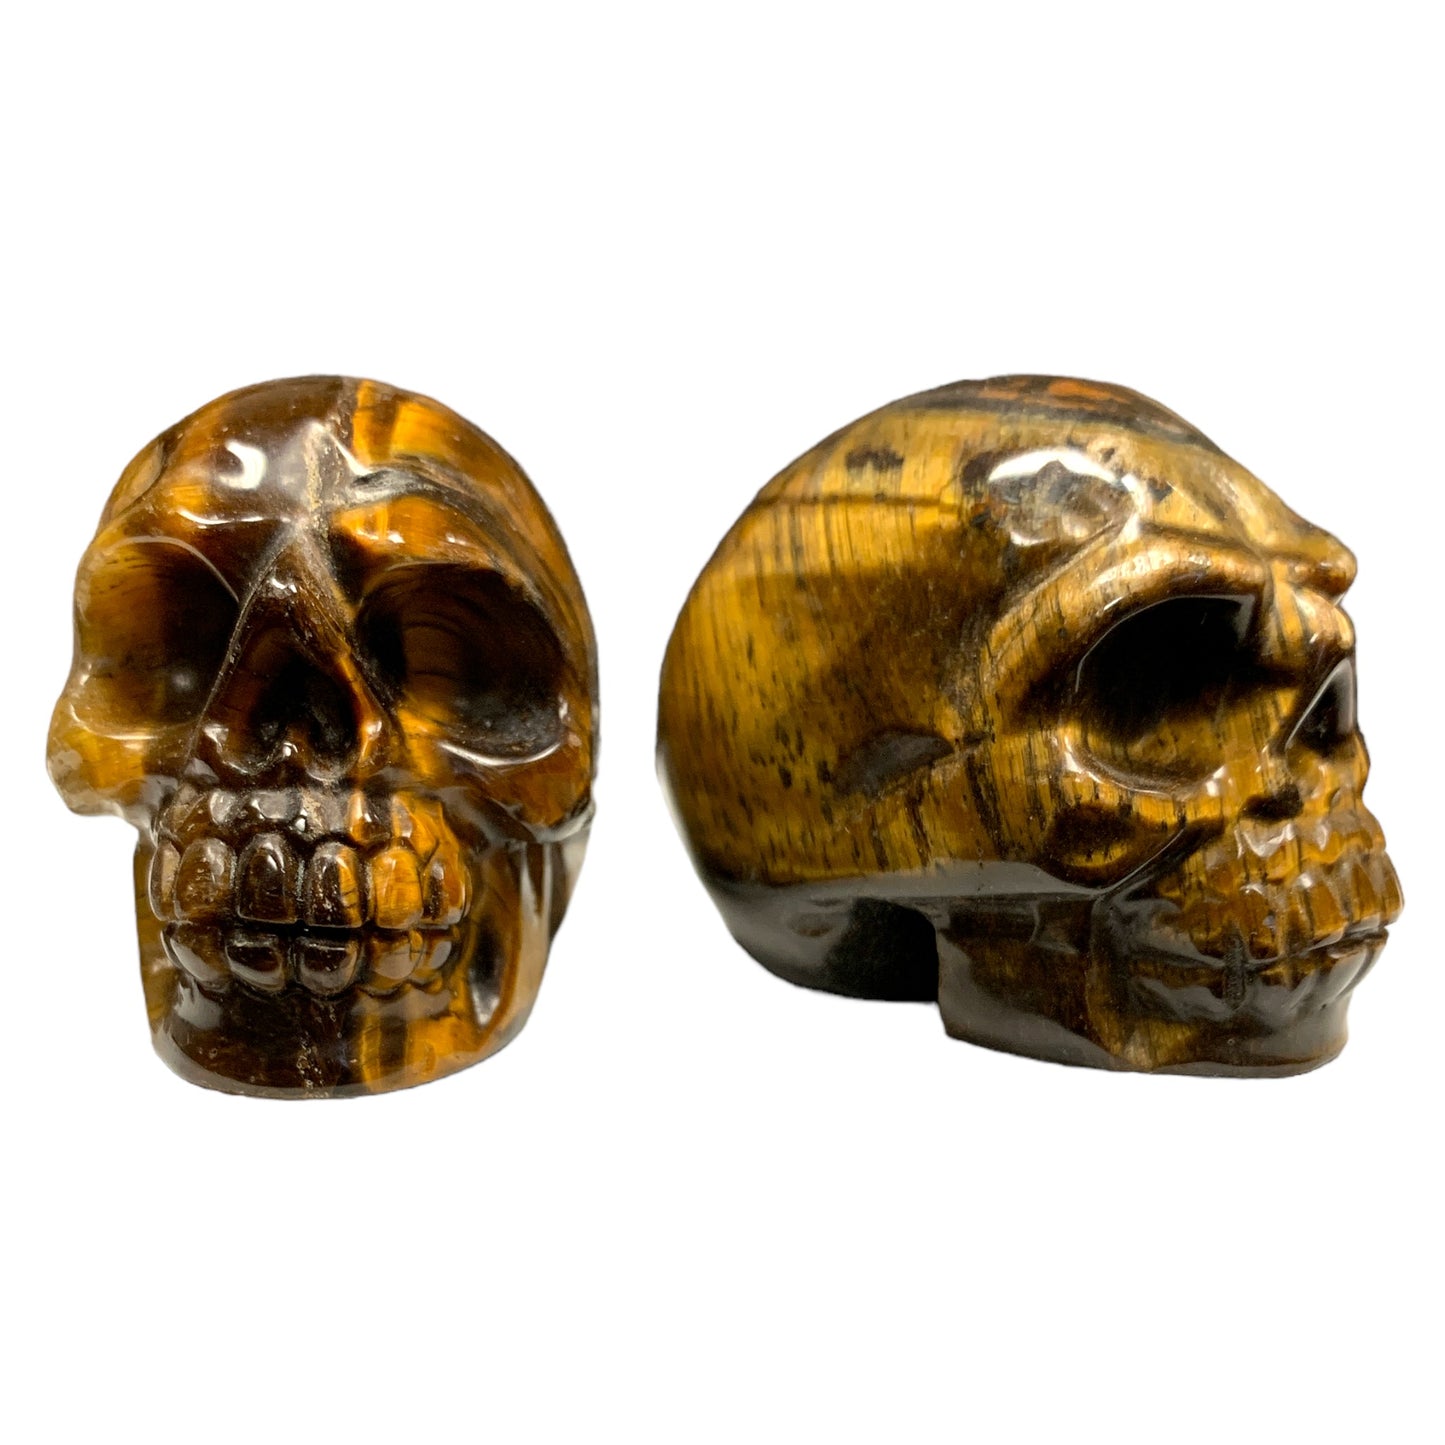 Skull Small - Tigers Eye - 40x50 mm - China - NEW622